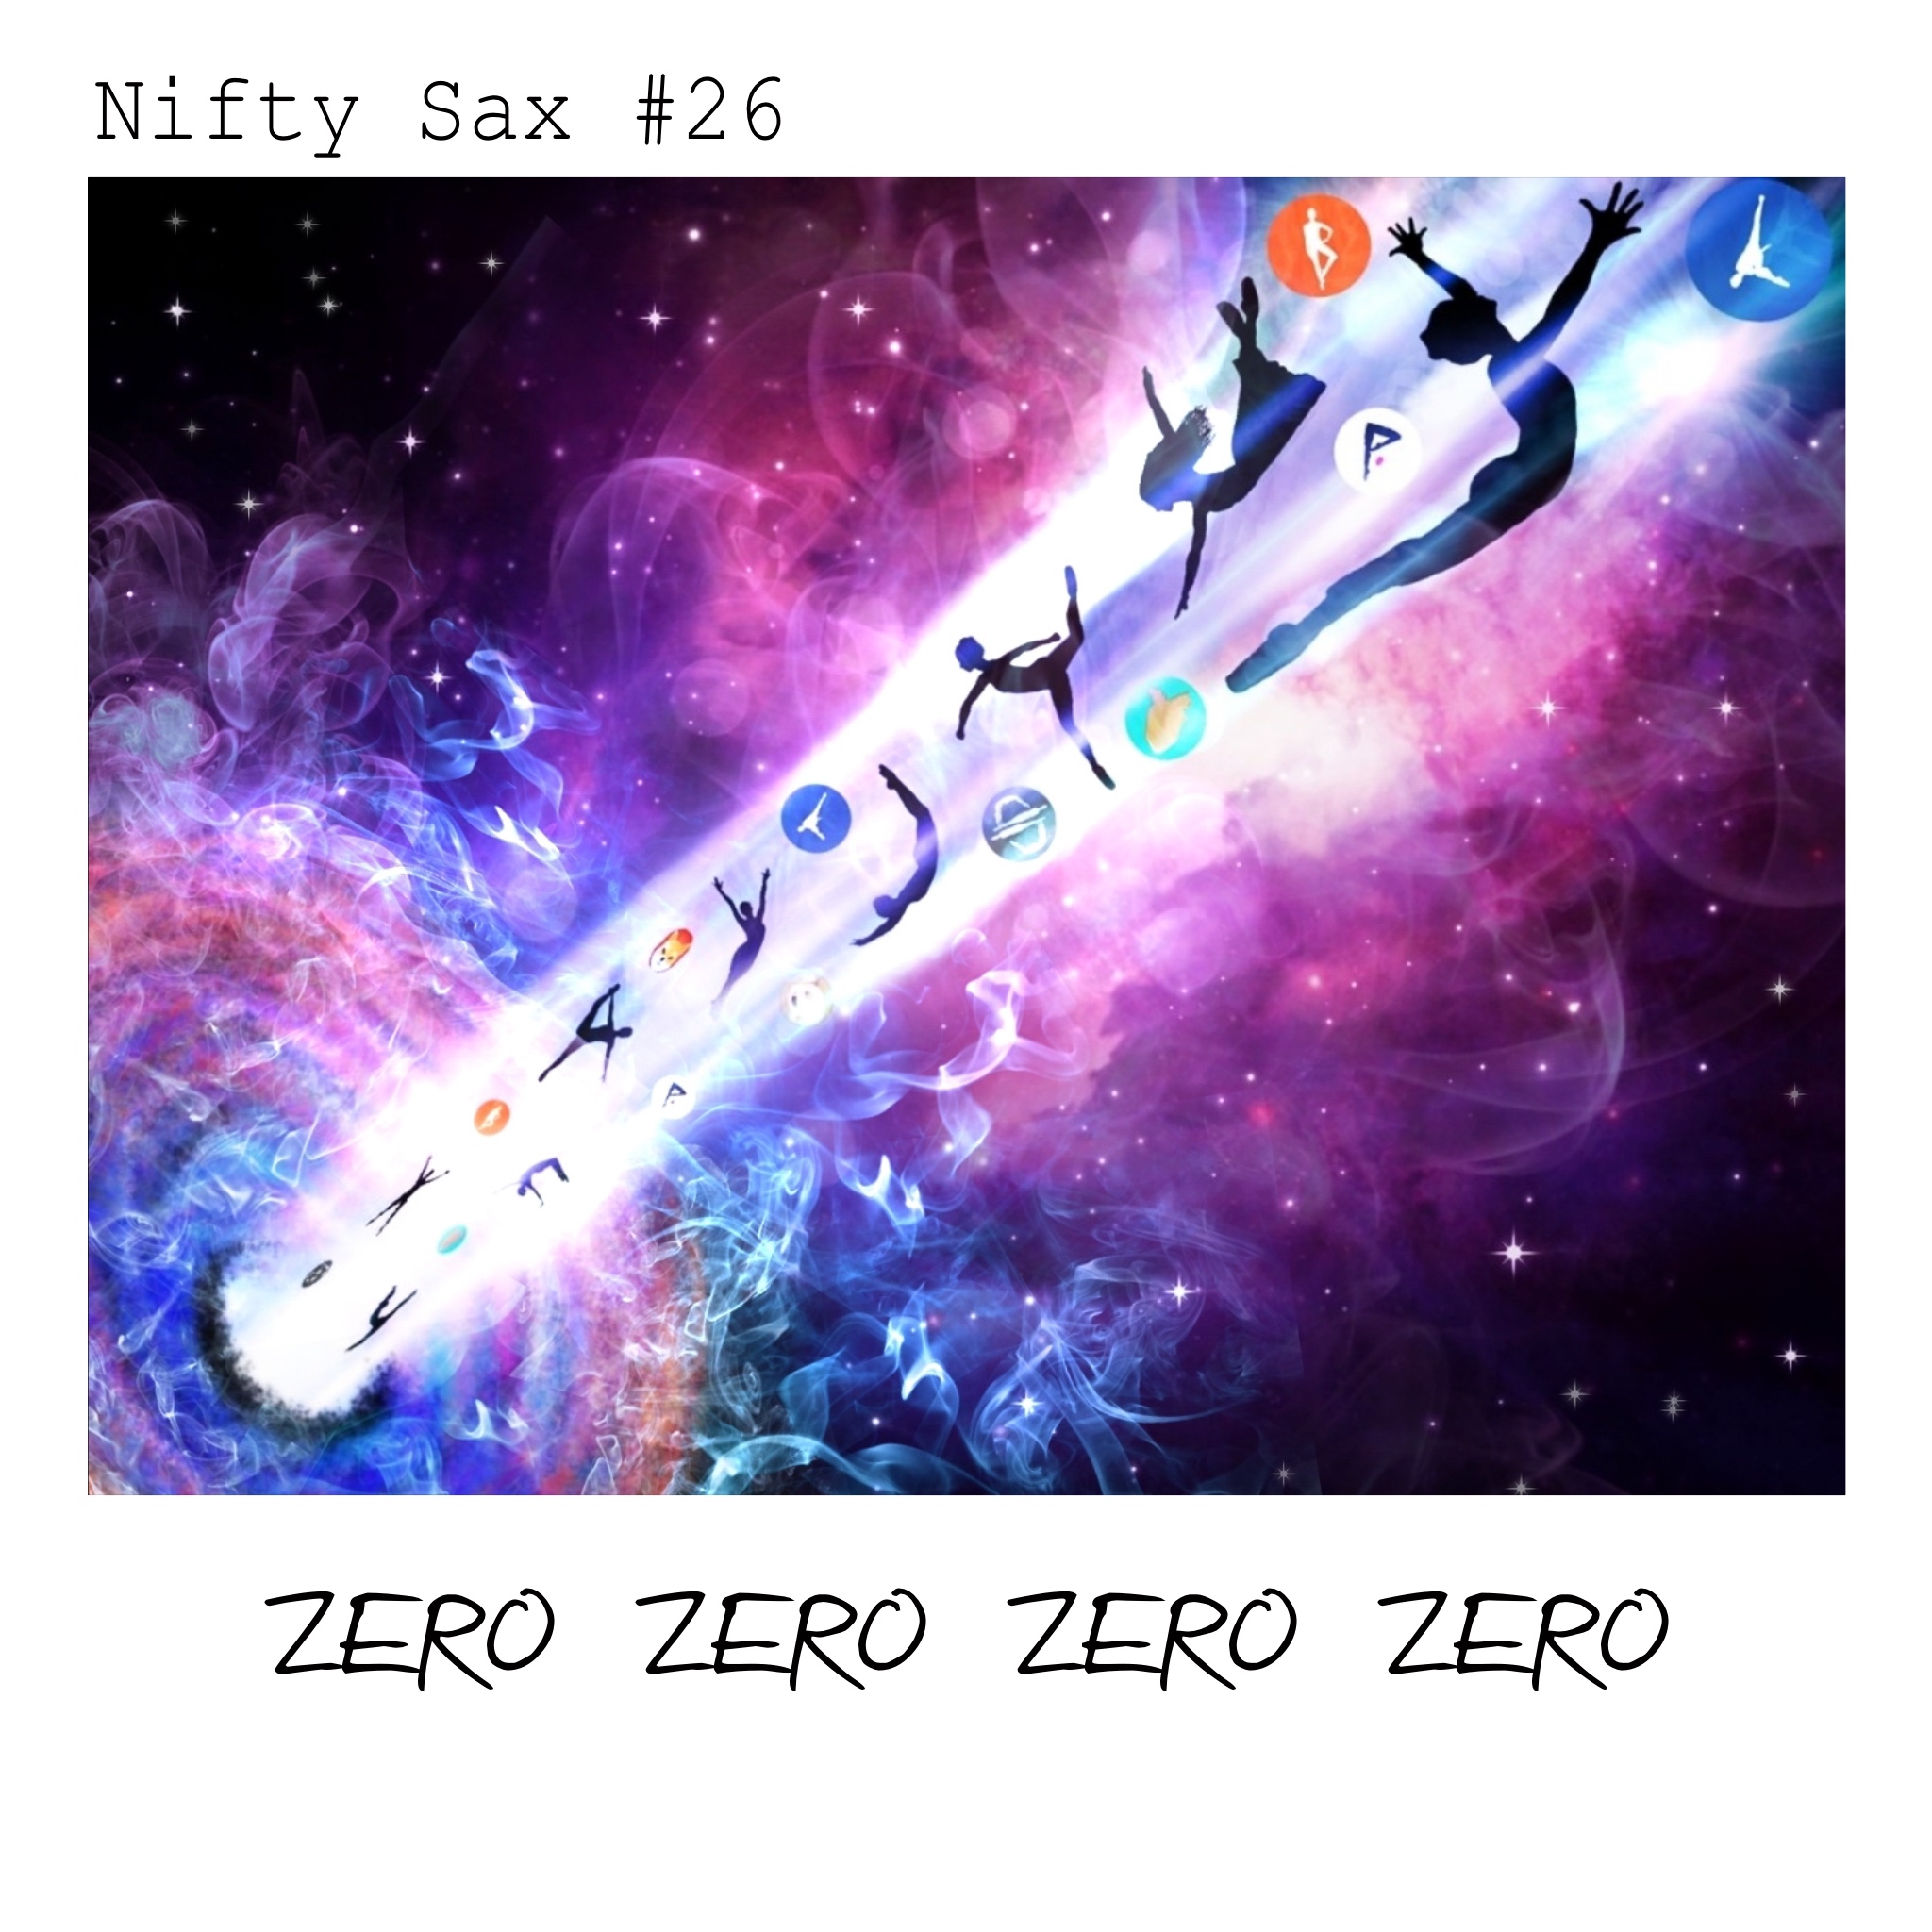 Nifty Sax: Genesis #26 - Zero Zero Zero Zero